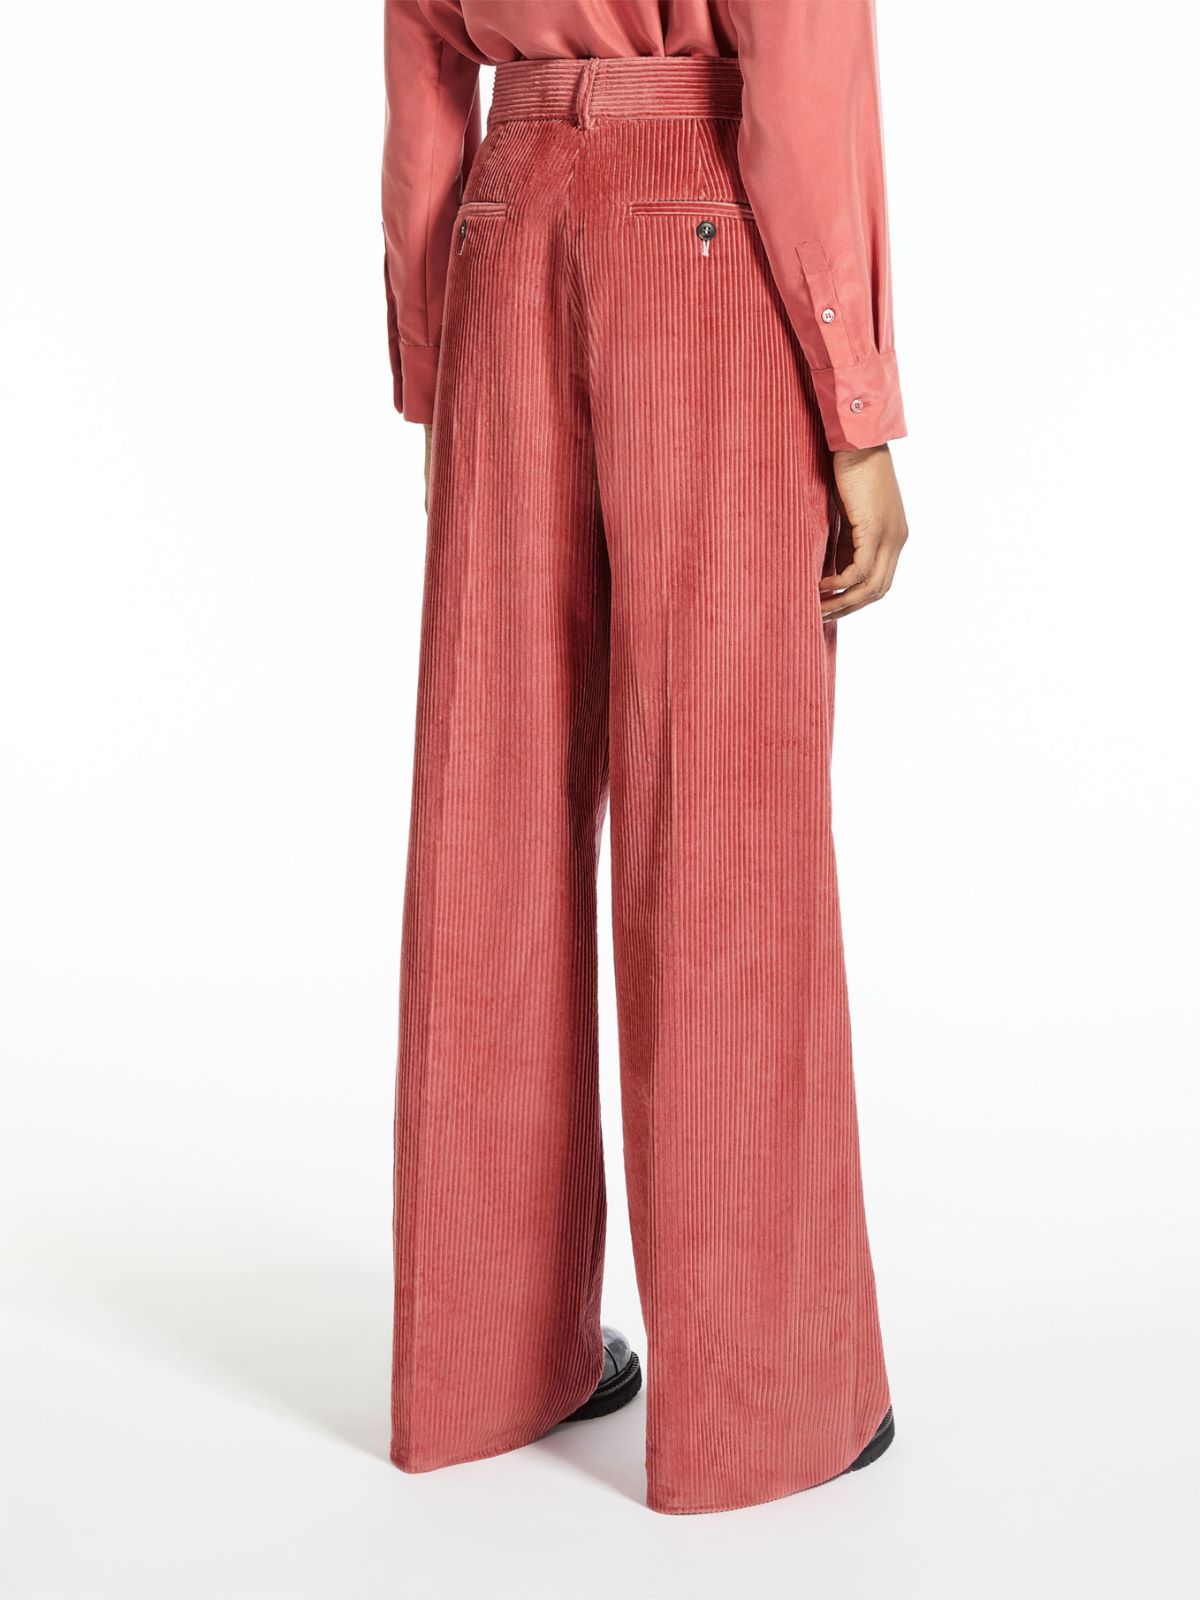 Cotton velvet trousers - BRICK RED - Weekend Max Mara - 3